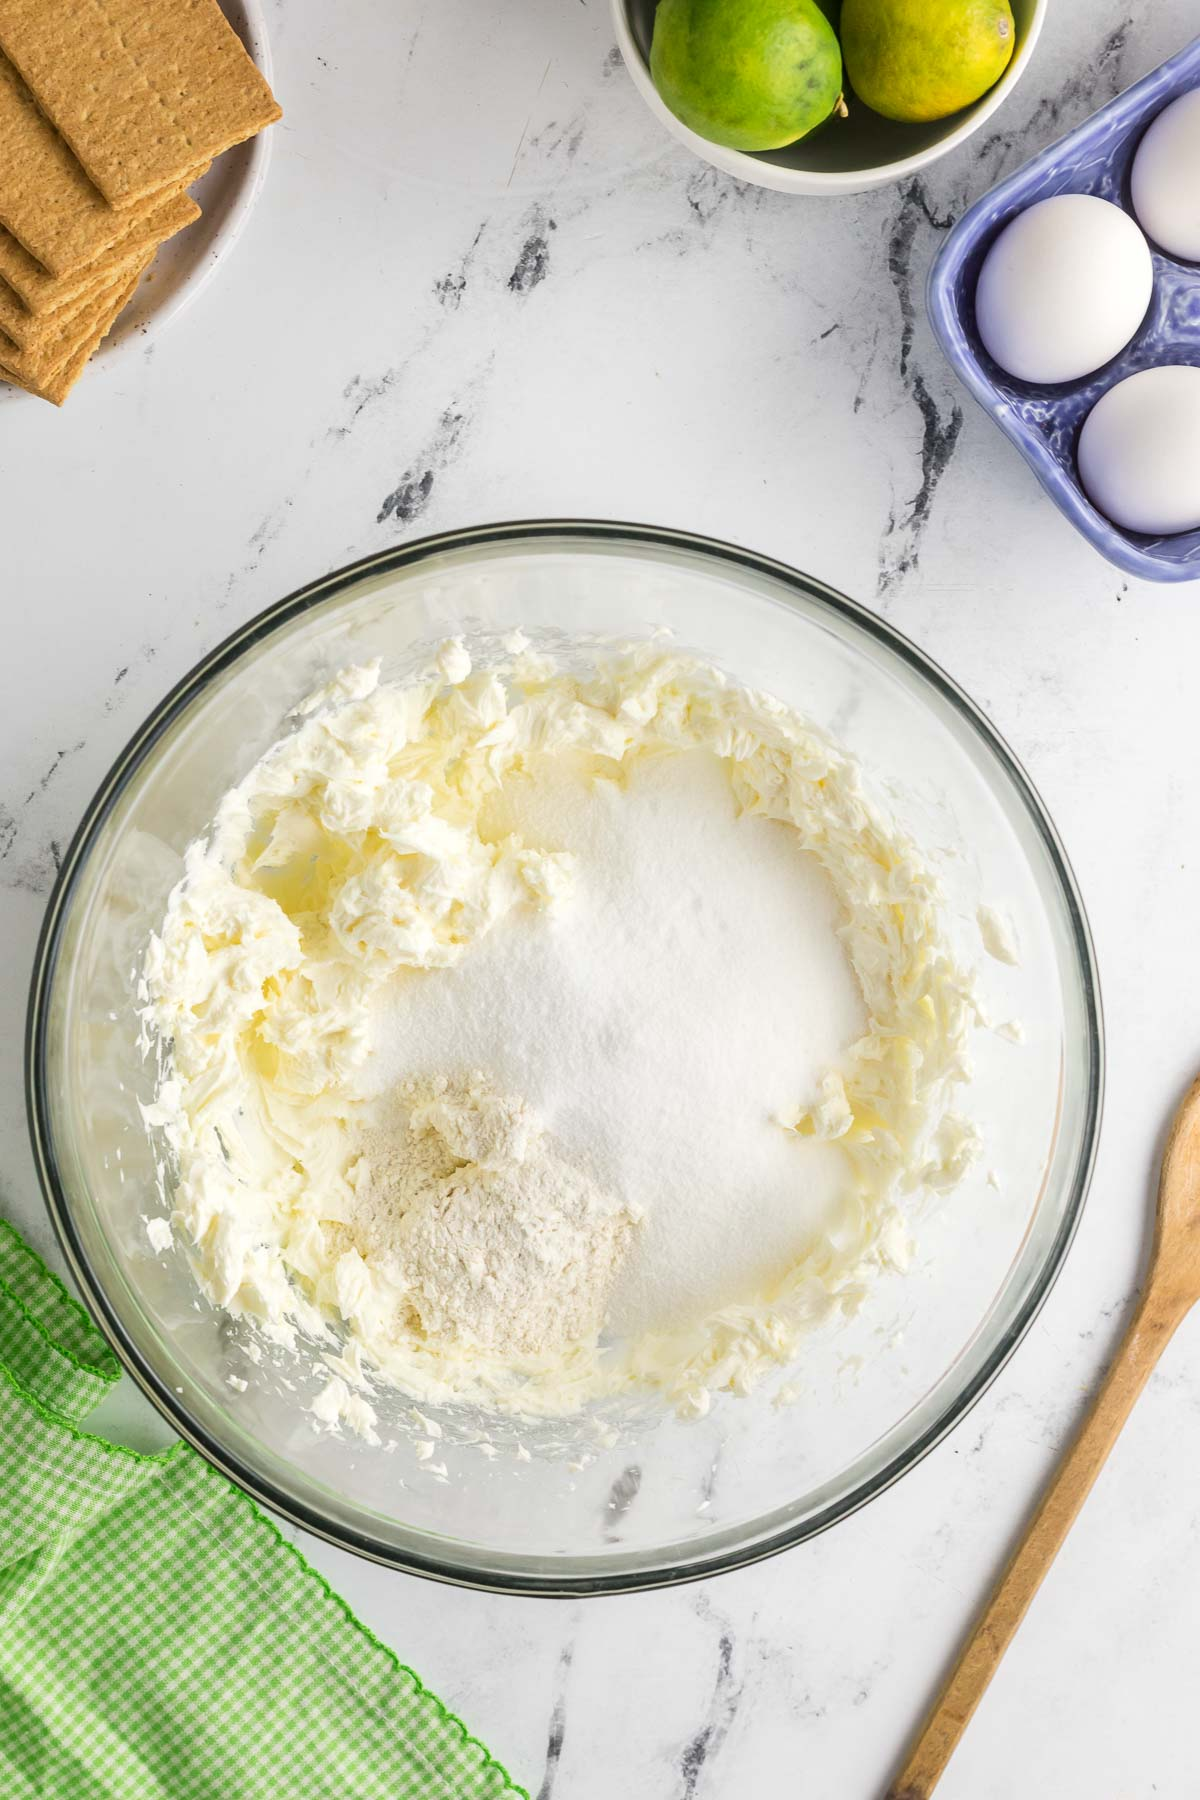 flour, sugar, and salt added to beaten cream cheese mixture in bowl